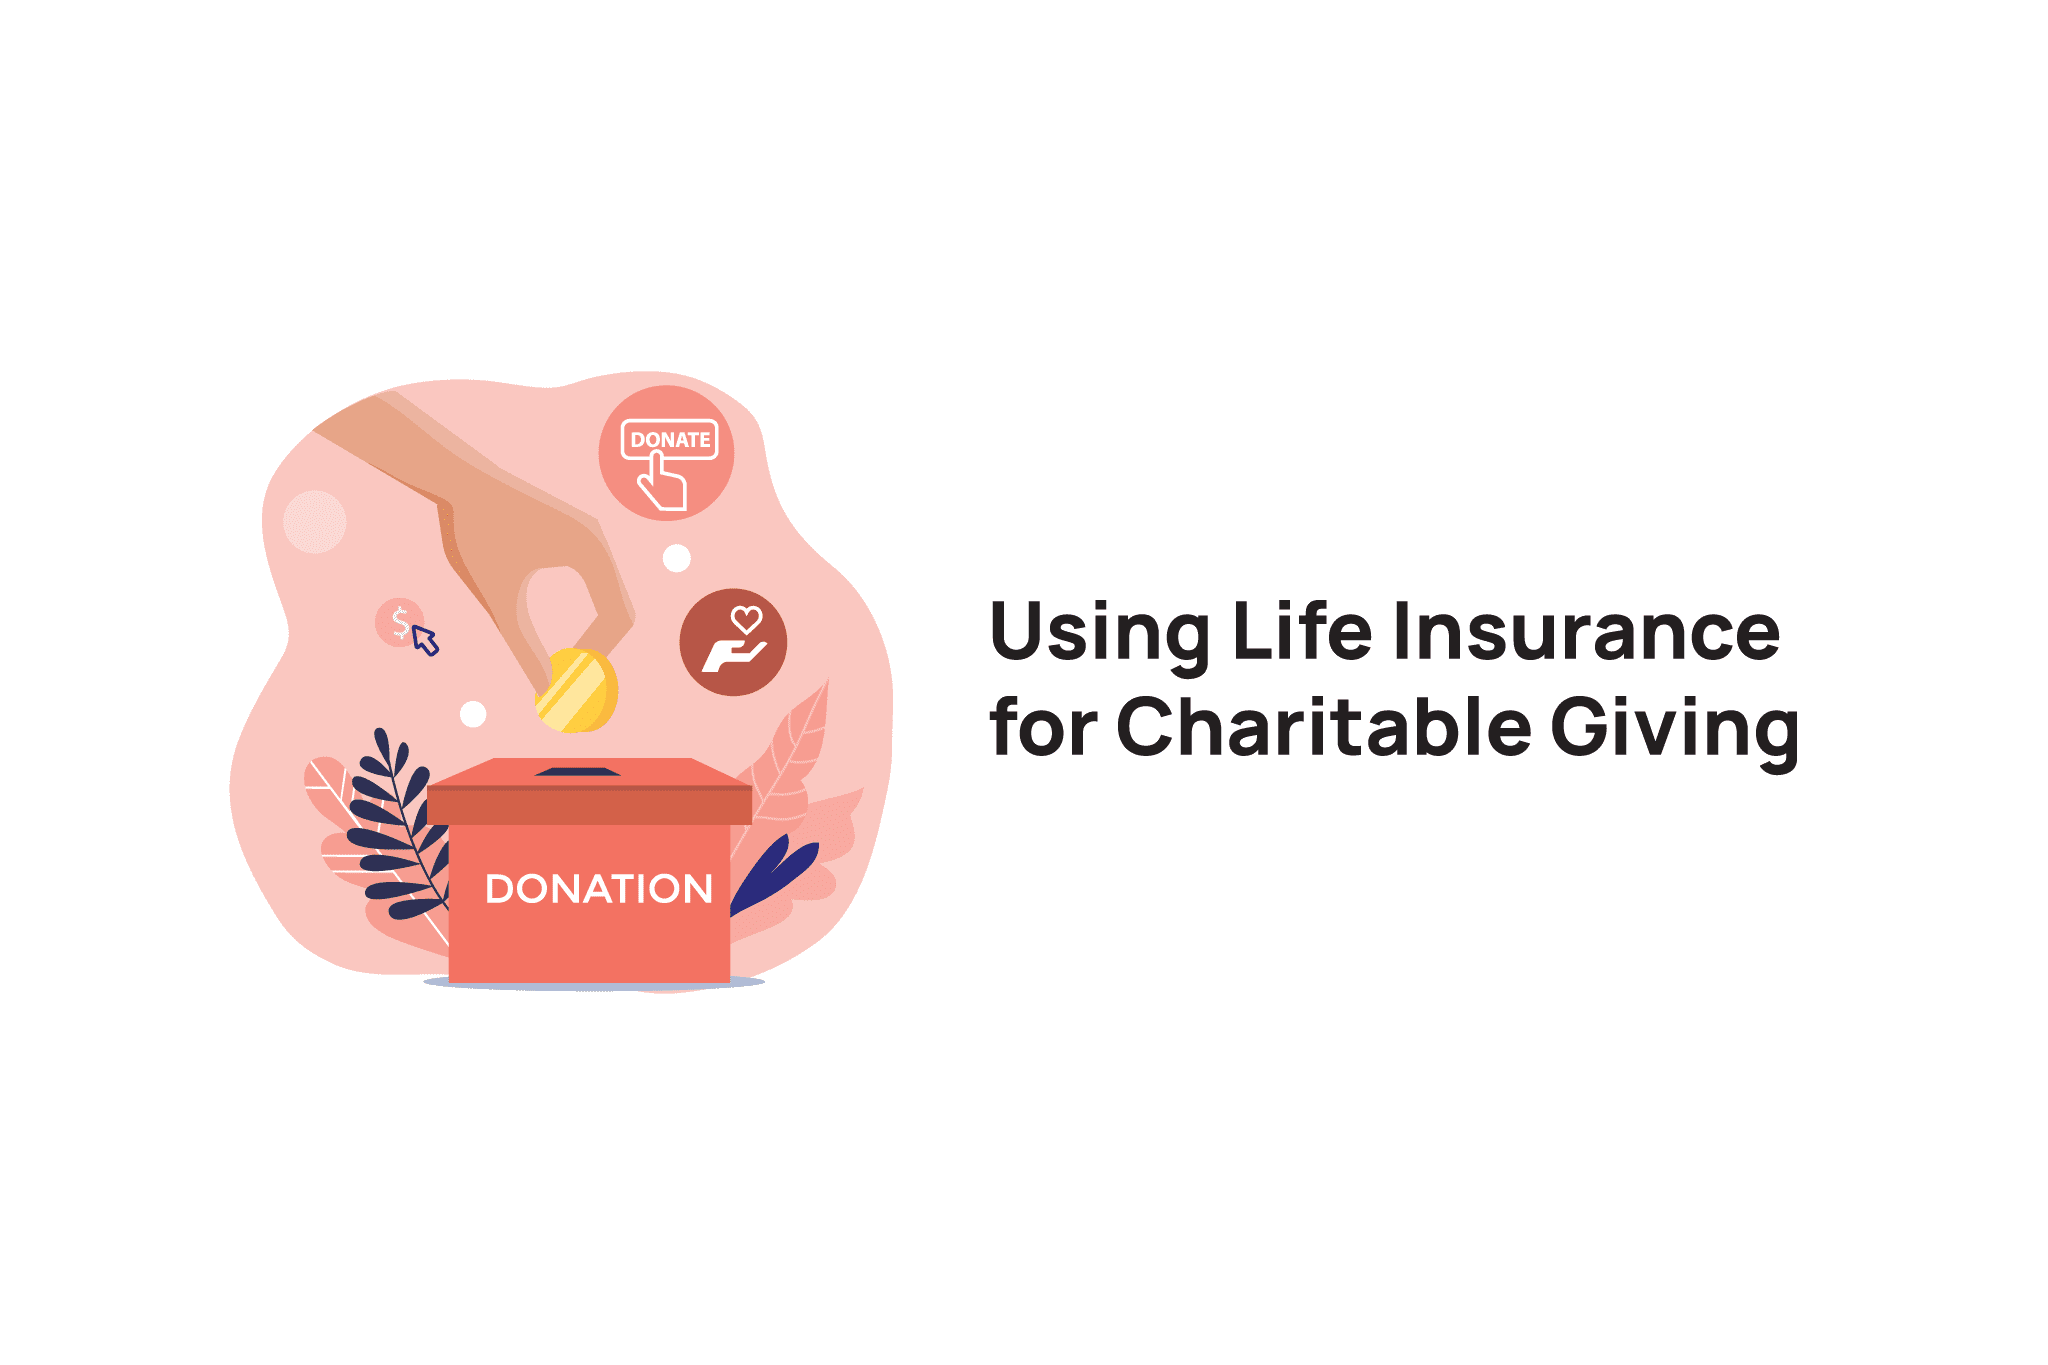 Using Life Insurance for Charitable Giving